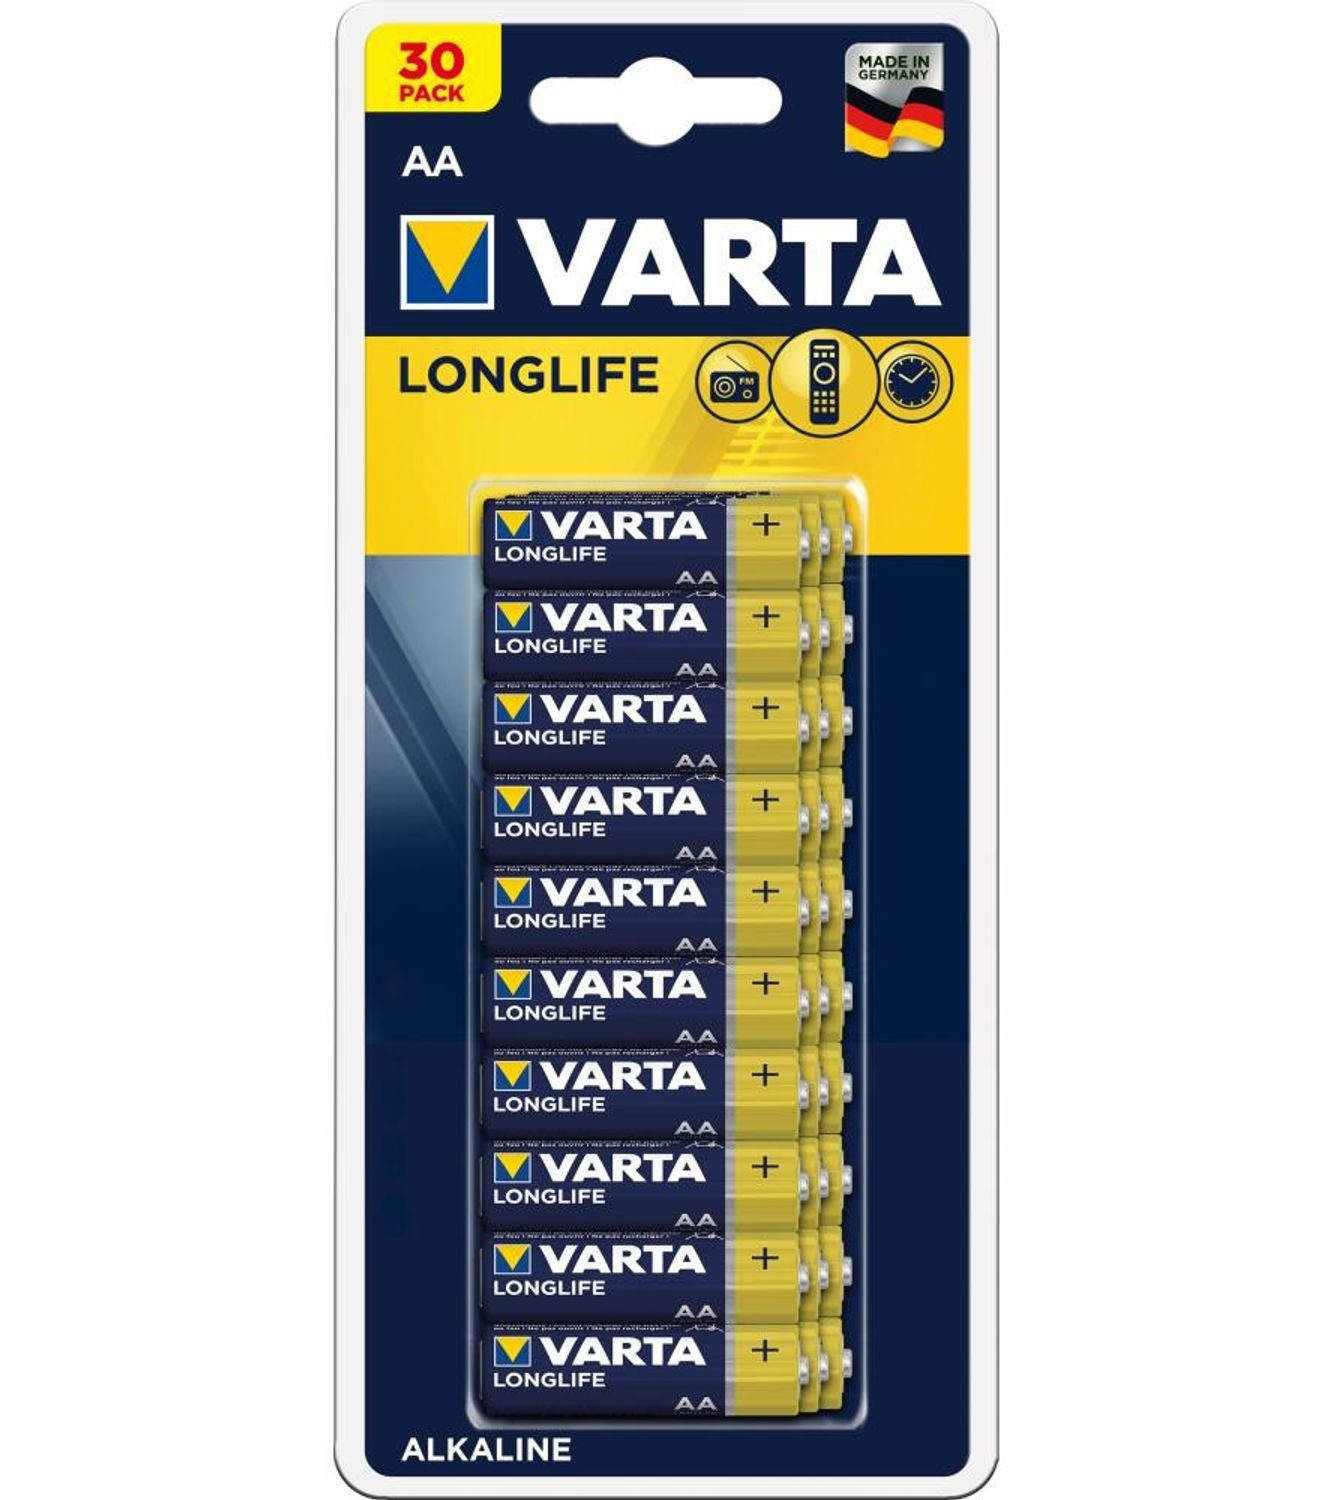 VARTA 12x 30er-Packung Longlife Alkaline-Batterien 3 Batterie, (360 AA LR6 St) 1,5V Großpackung